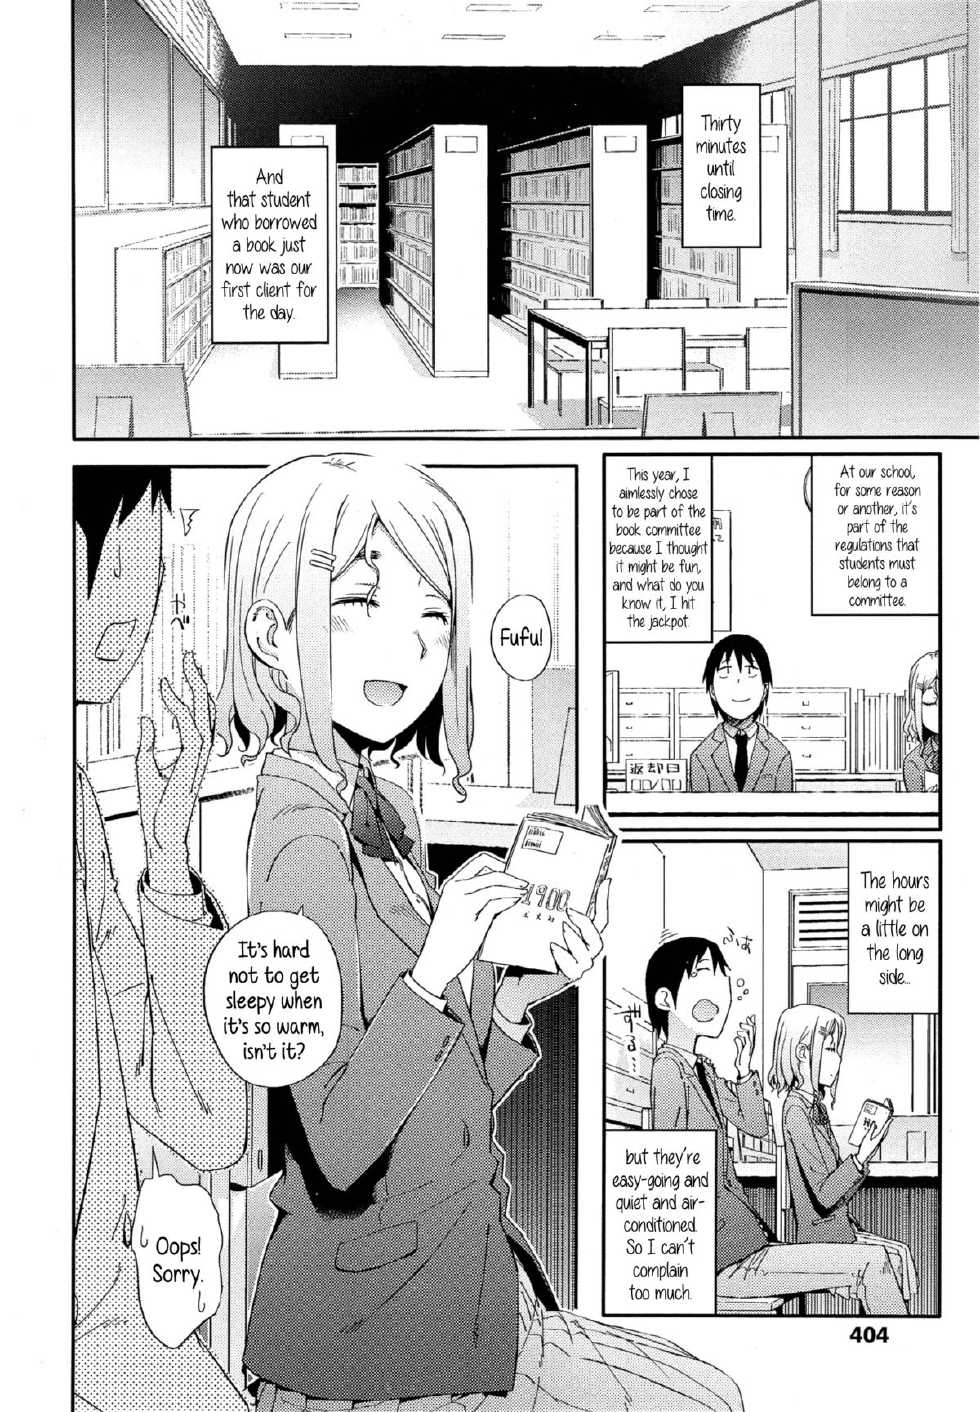 [Toruneko] No Damage, No High School Life. (Comic KOH Vol.4) [English] {5 a.m.} - Page 2